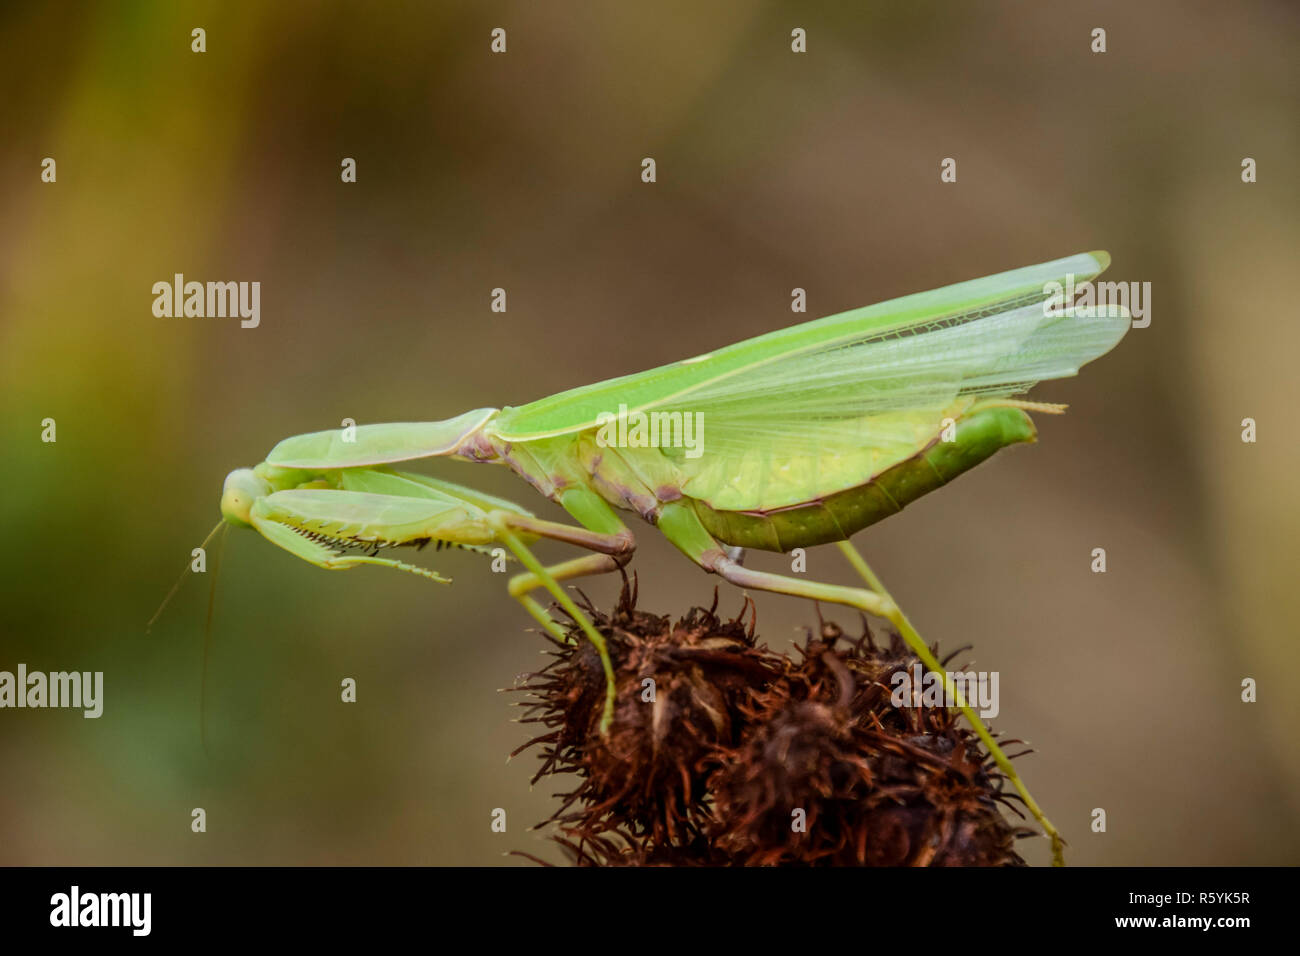 Mantis on the tong. Mating mantises. Mantis insect predator. Stock Photo